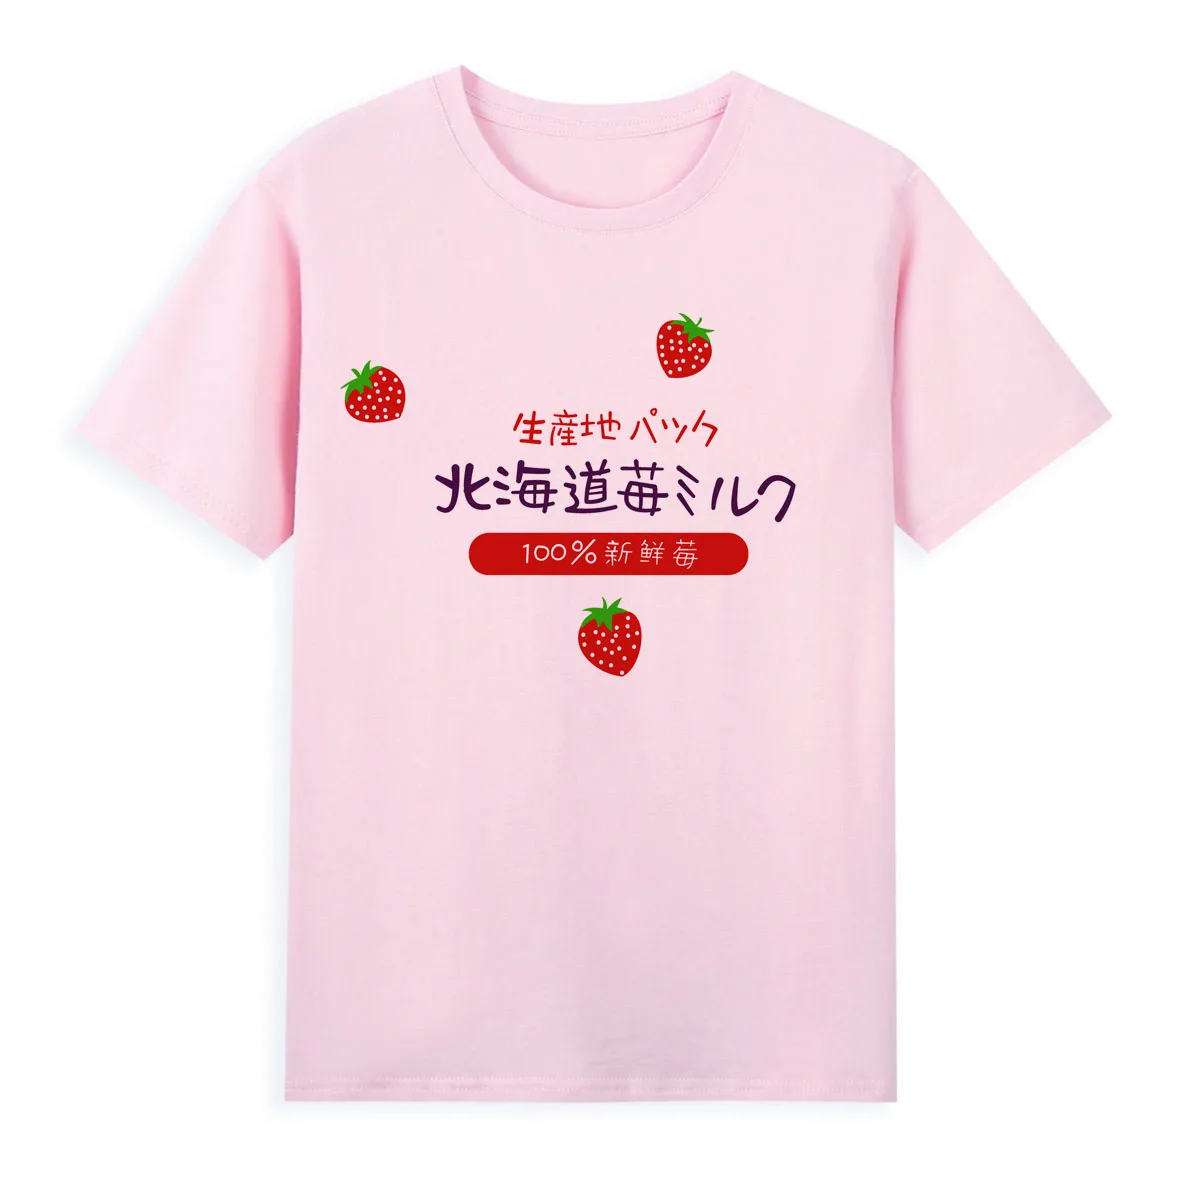 

Strawberry printed Japanese T-shirt Women Summer Tops Tees Original Brand Tshirt Soft Casual Shirts For Girls A221